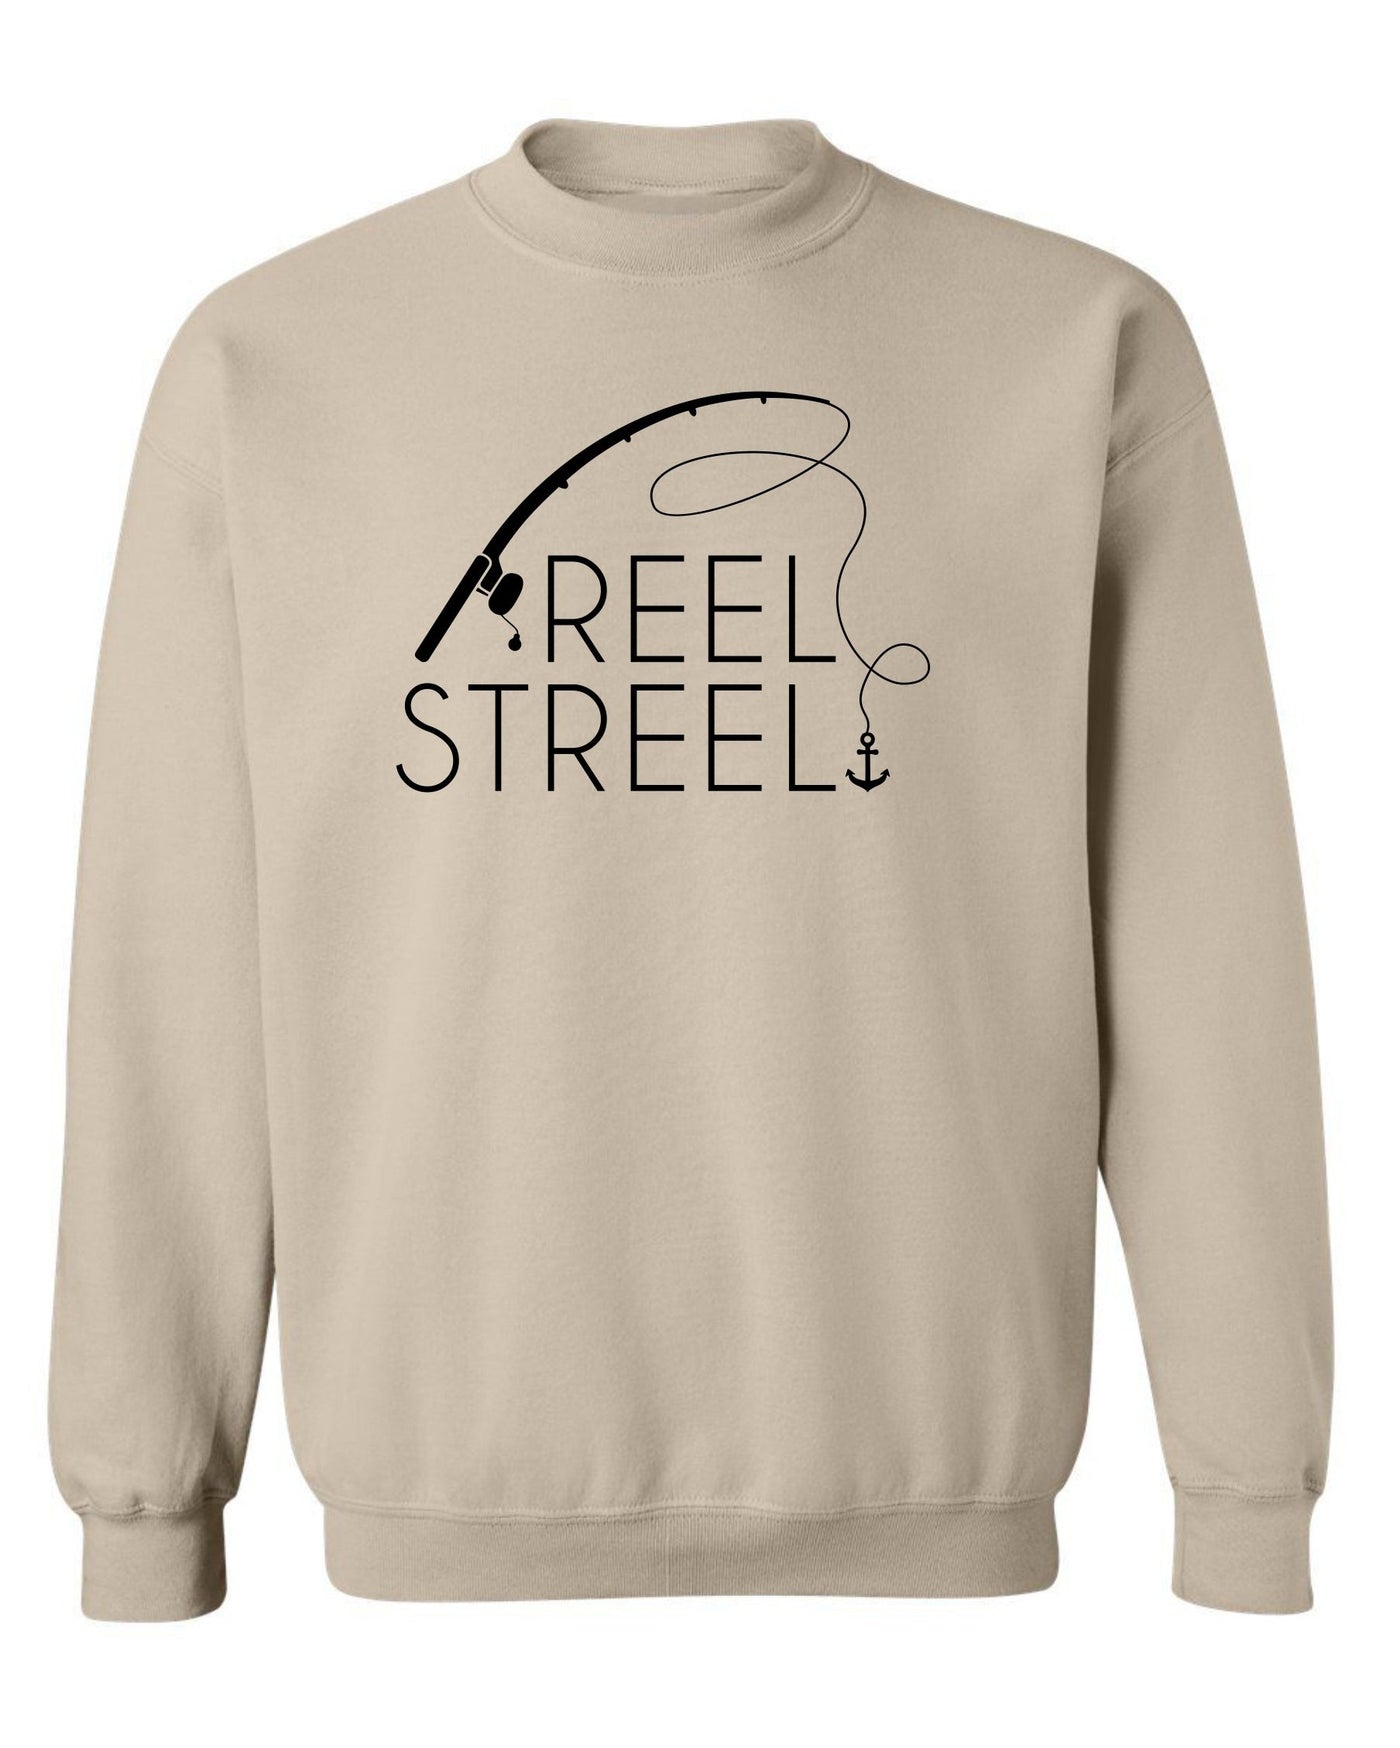 "Reel Streel" Unisex Crewneck Sweatshirt